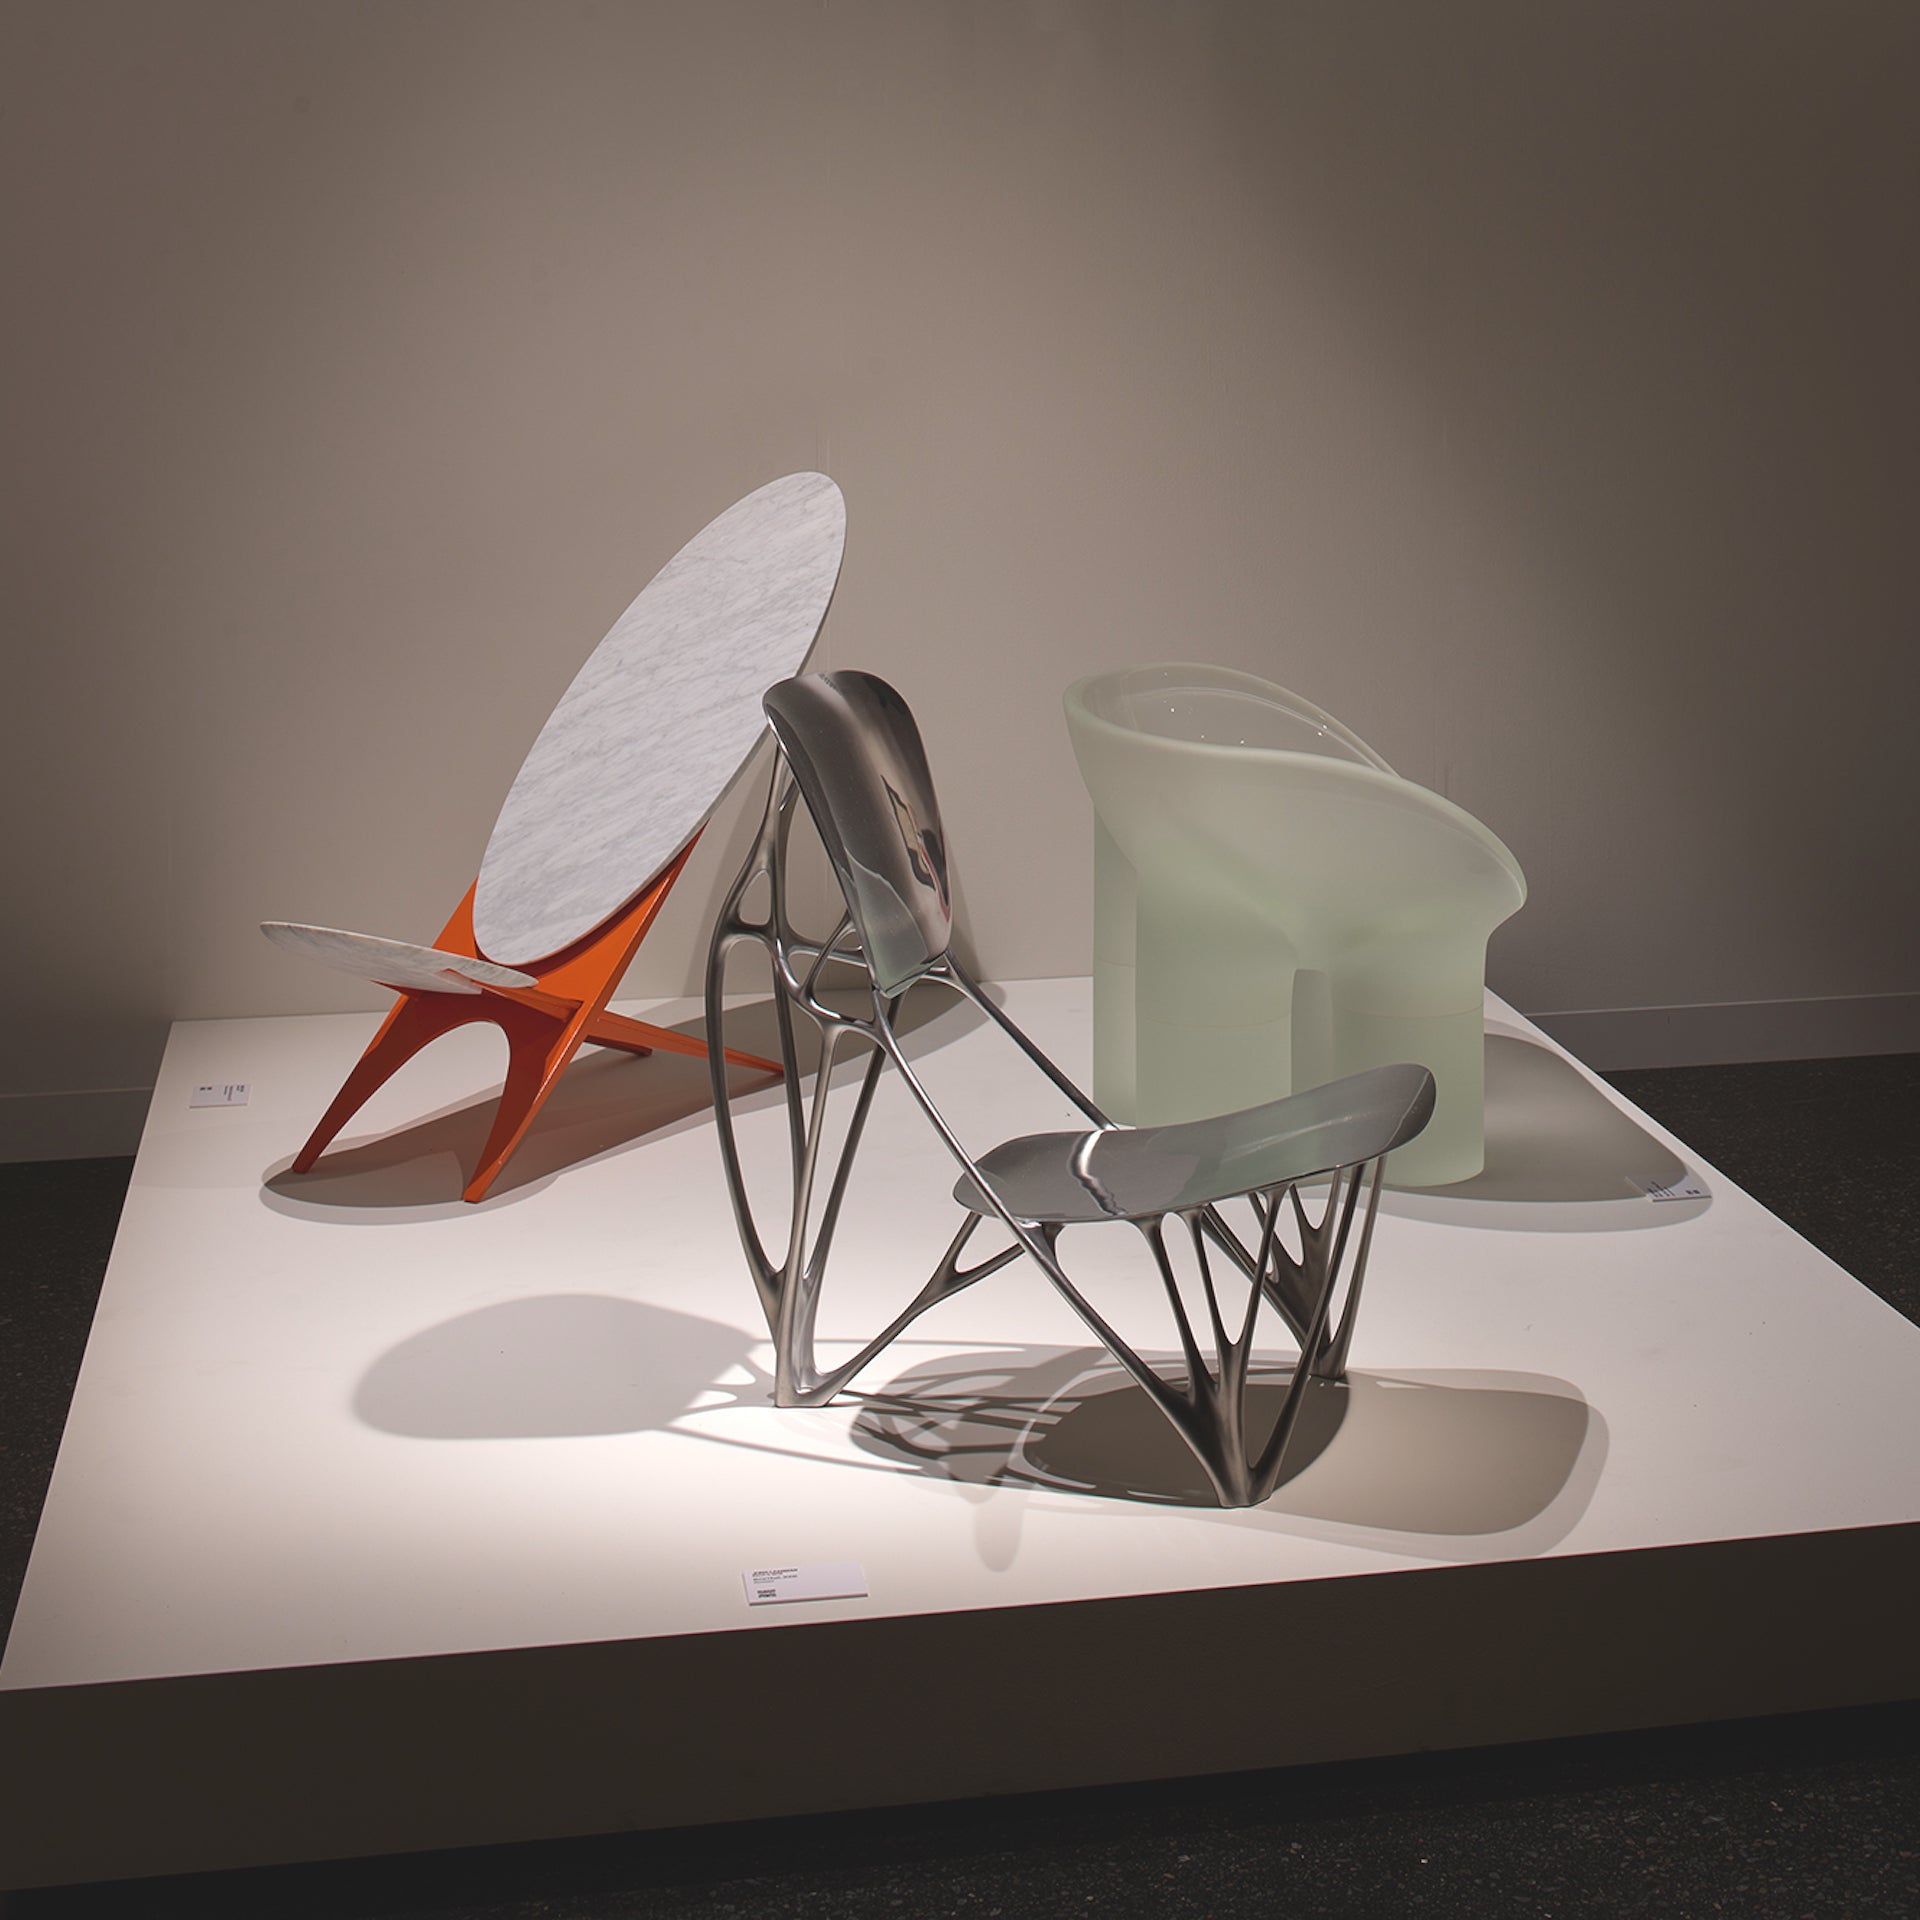 Joris Laarman’s Bone Chair, presented by Friedman Benda at Design Miami/ Basel 2023. Photo © World Red Eye for Design Miami/ Basel